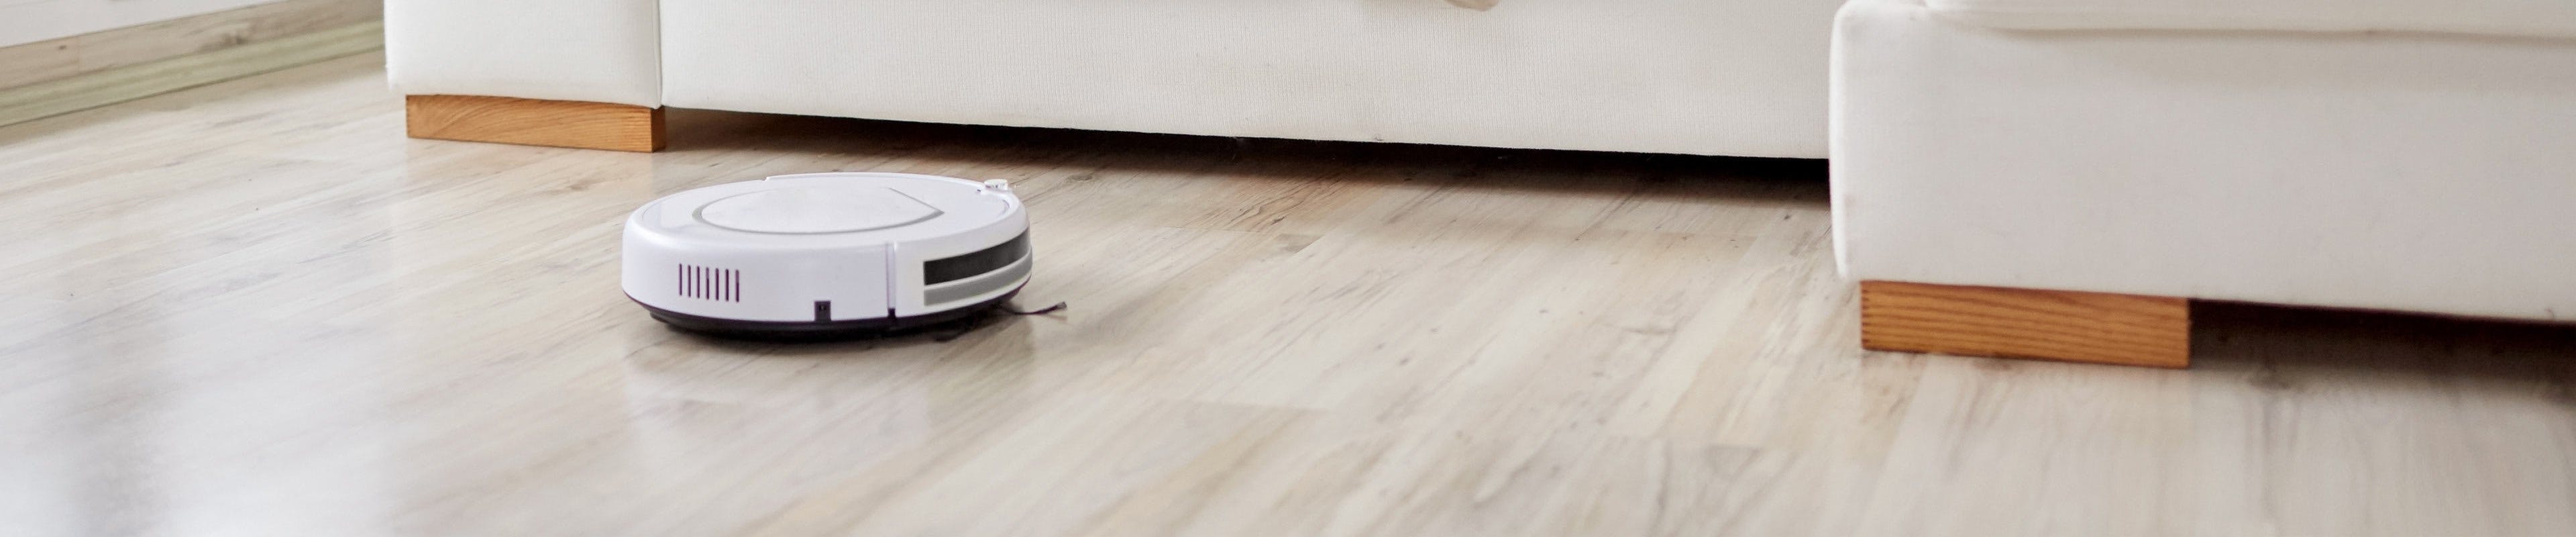 Smart vacuum cleaning the living room floor.